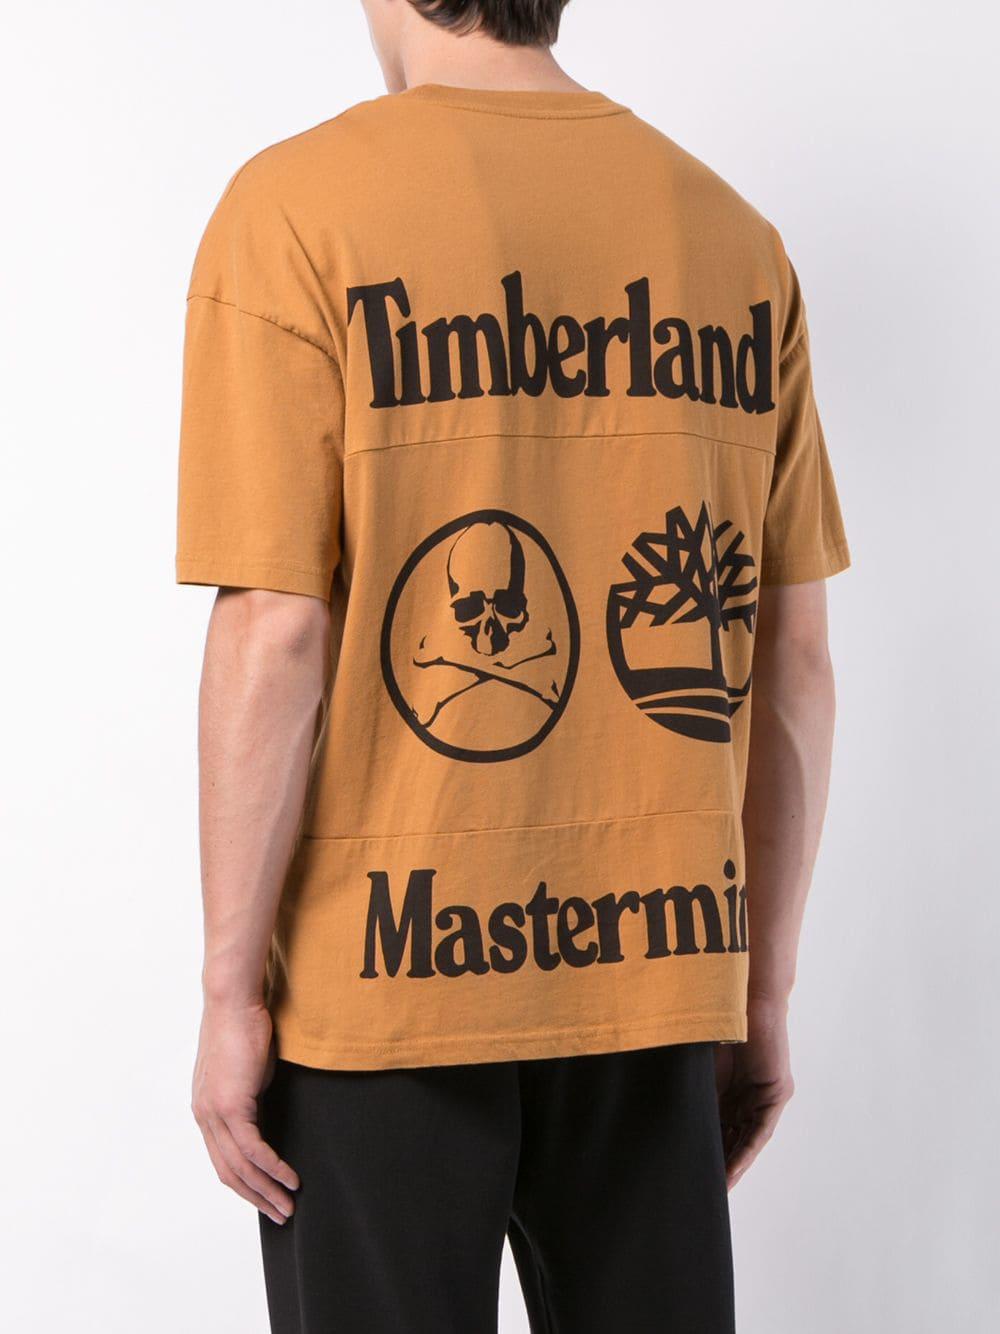 timberland x mastermind t shirt